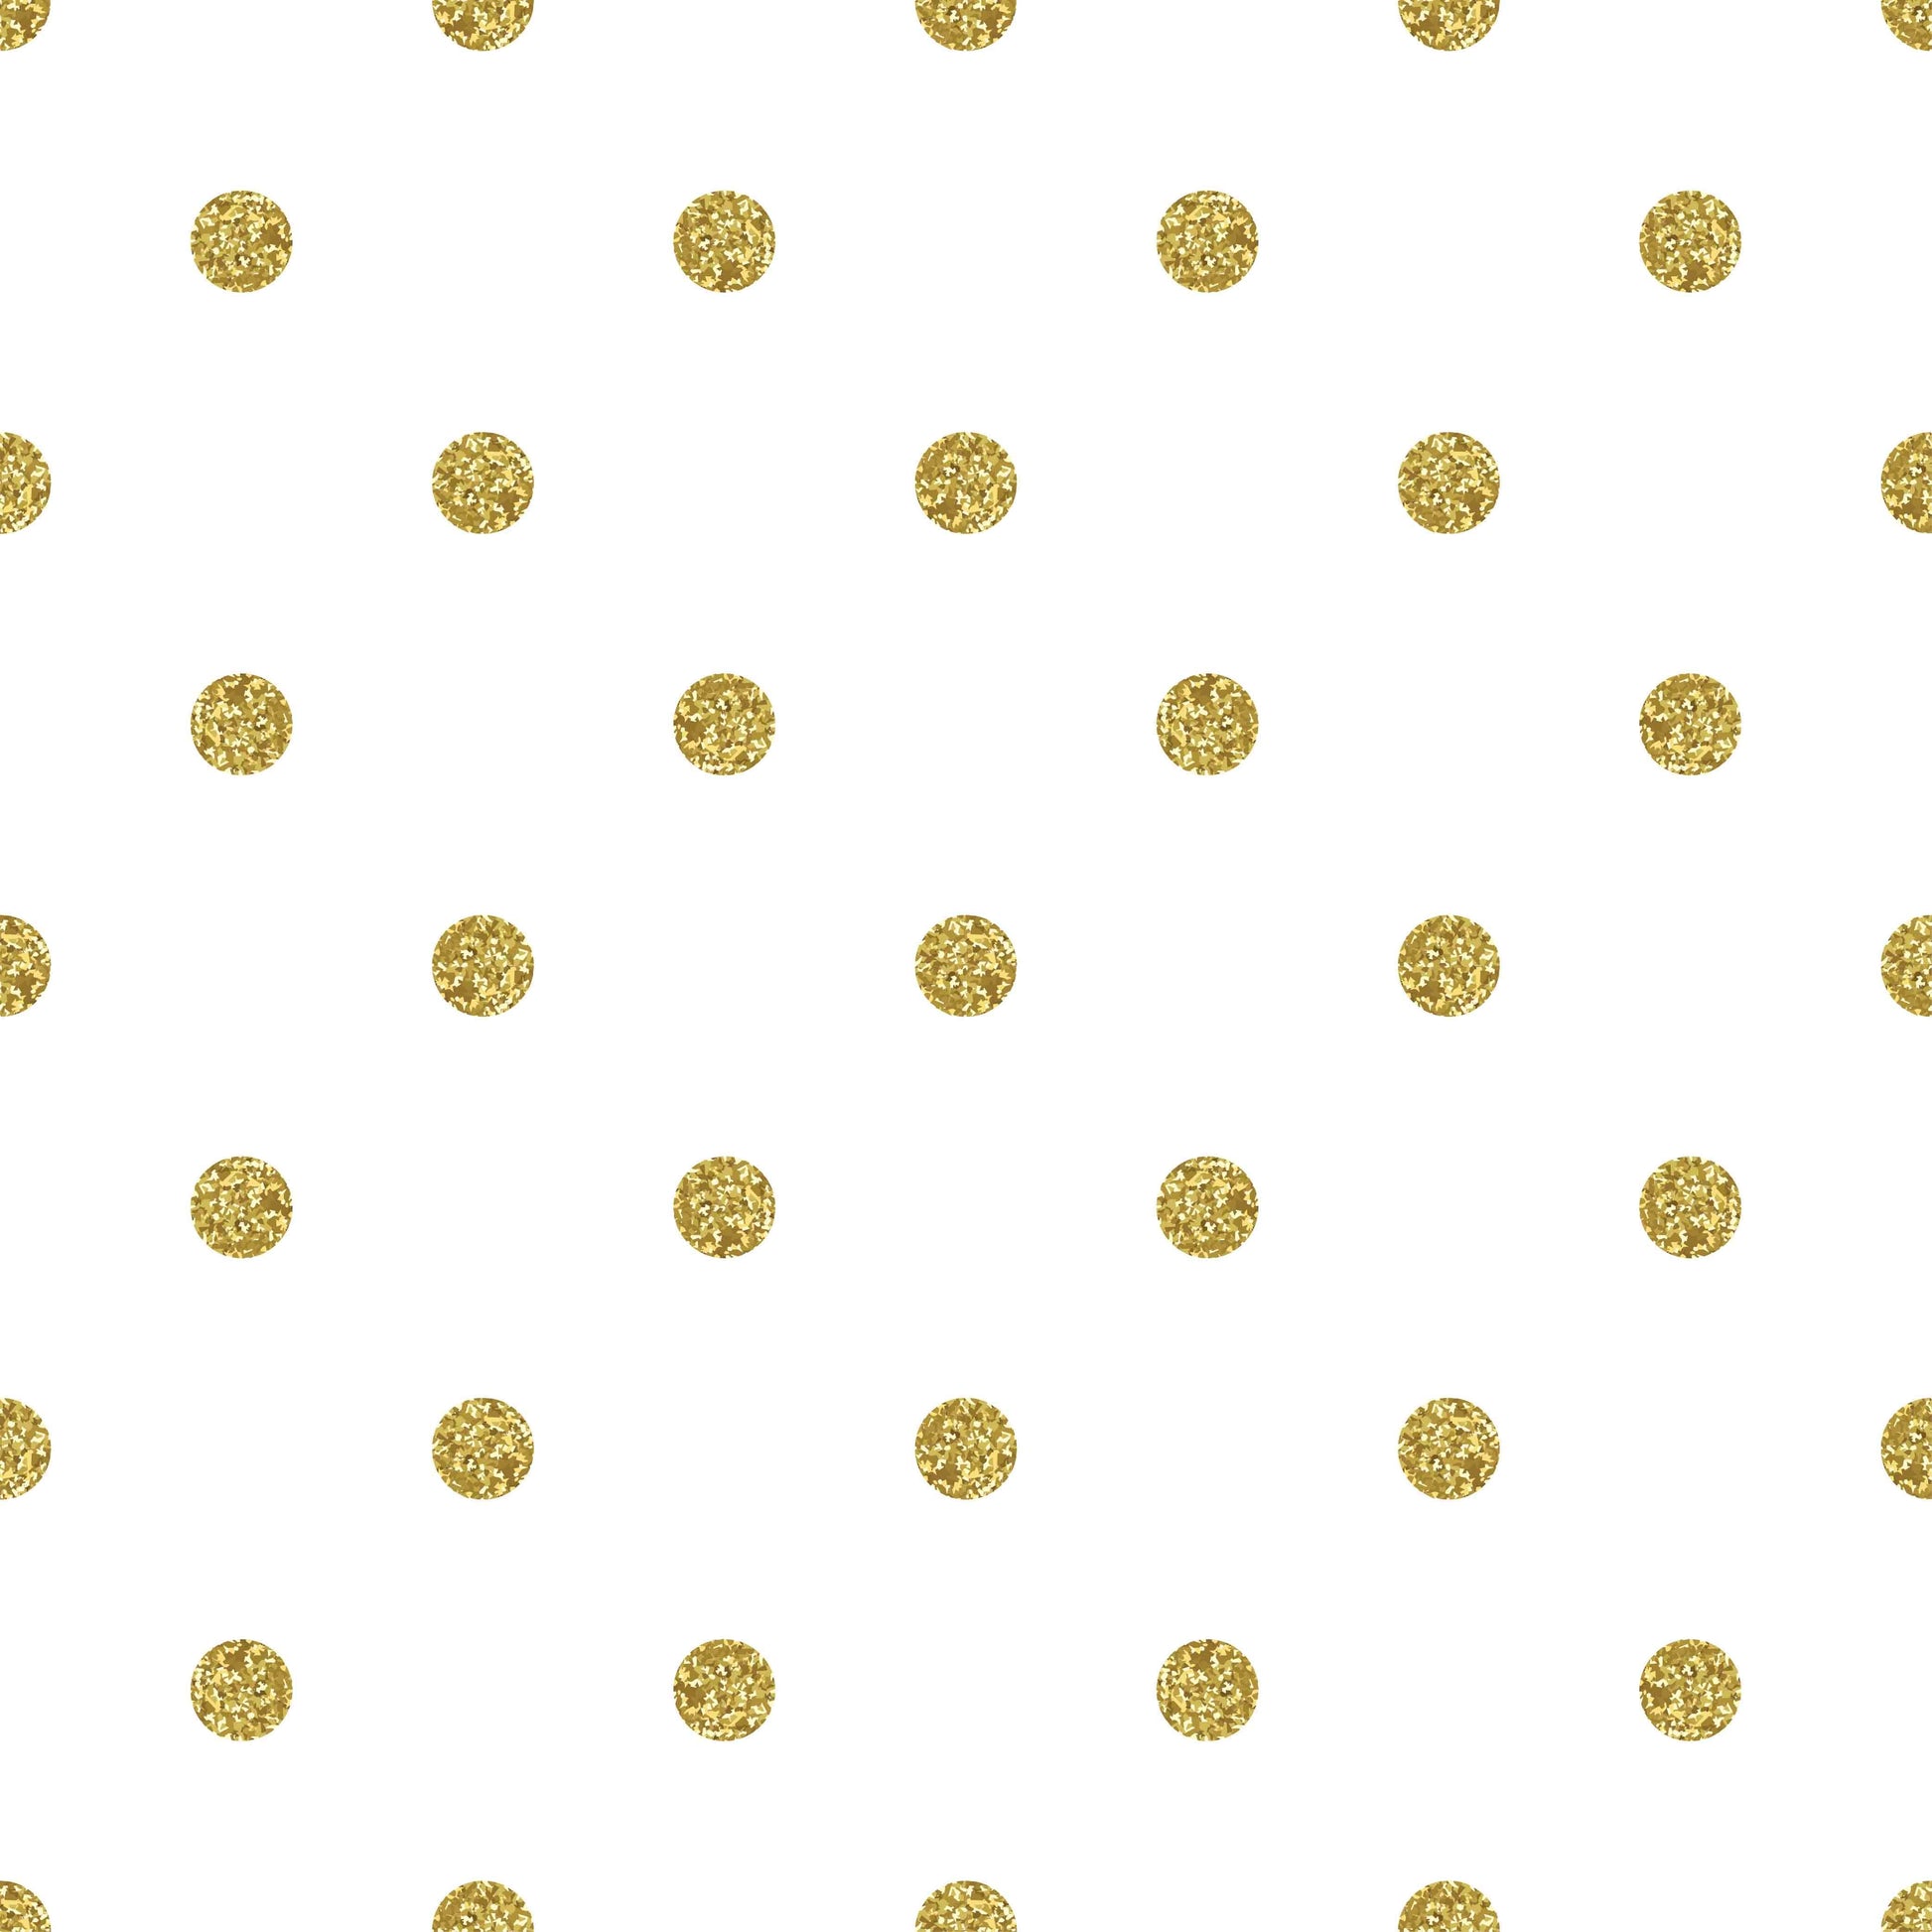 Gold Polka Dots Printed White Wall Background Photography Backdrop Shopbackdrop